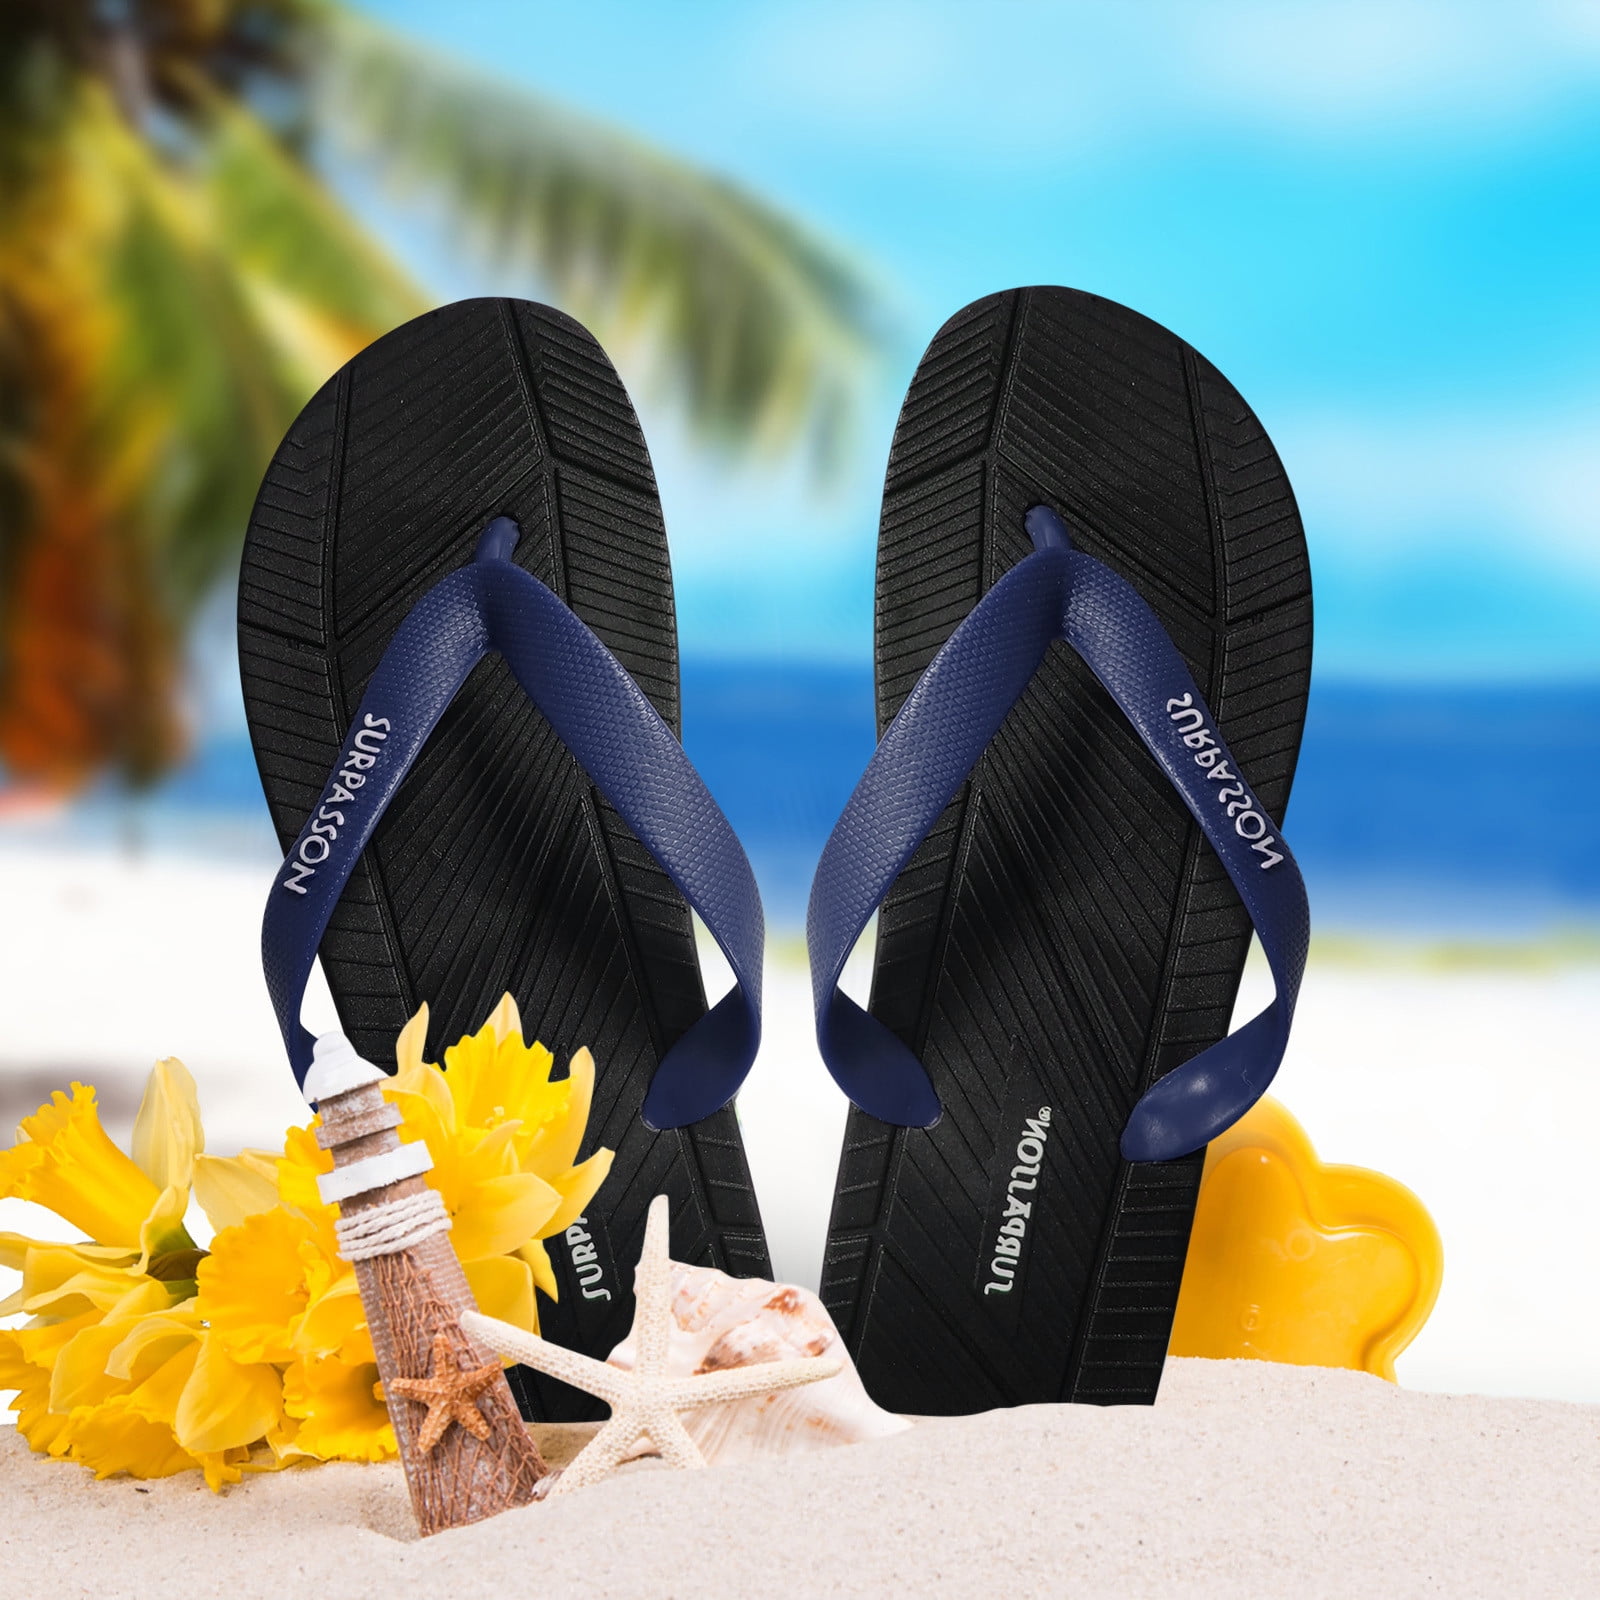 Akiihool Sandals Men Dressy Men's Beach Sandals, Quick Dry Flip-Flop  Slides, Waterproof Wet Grip Soles, Soft Comfort Fit Arch Support (Blue,11)